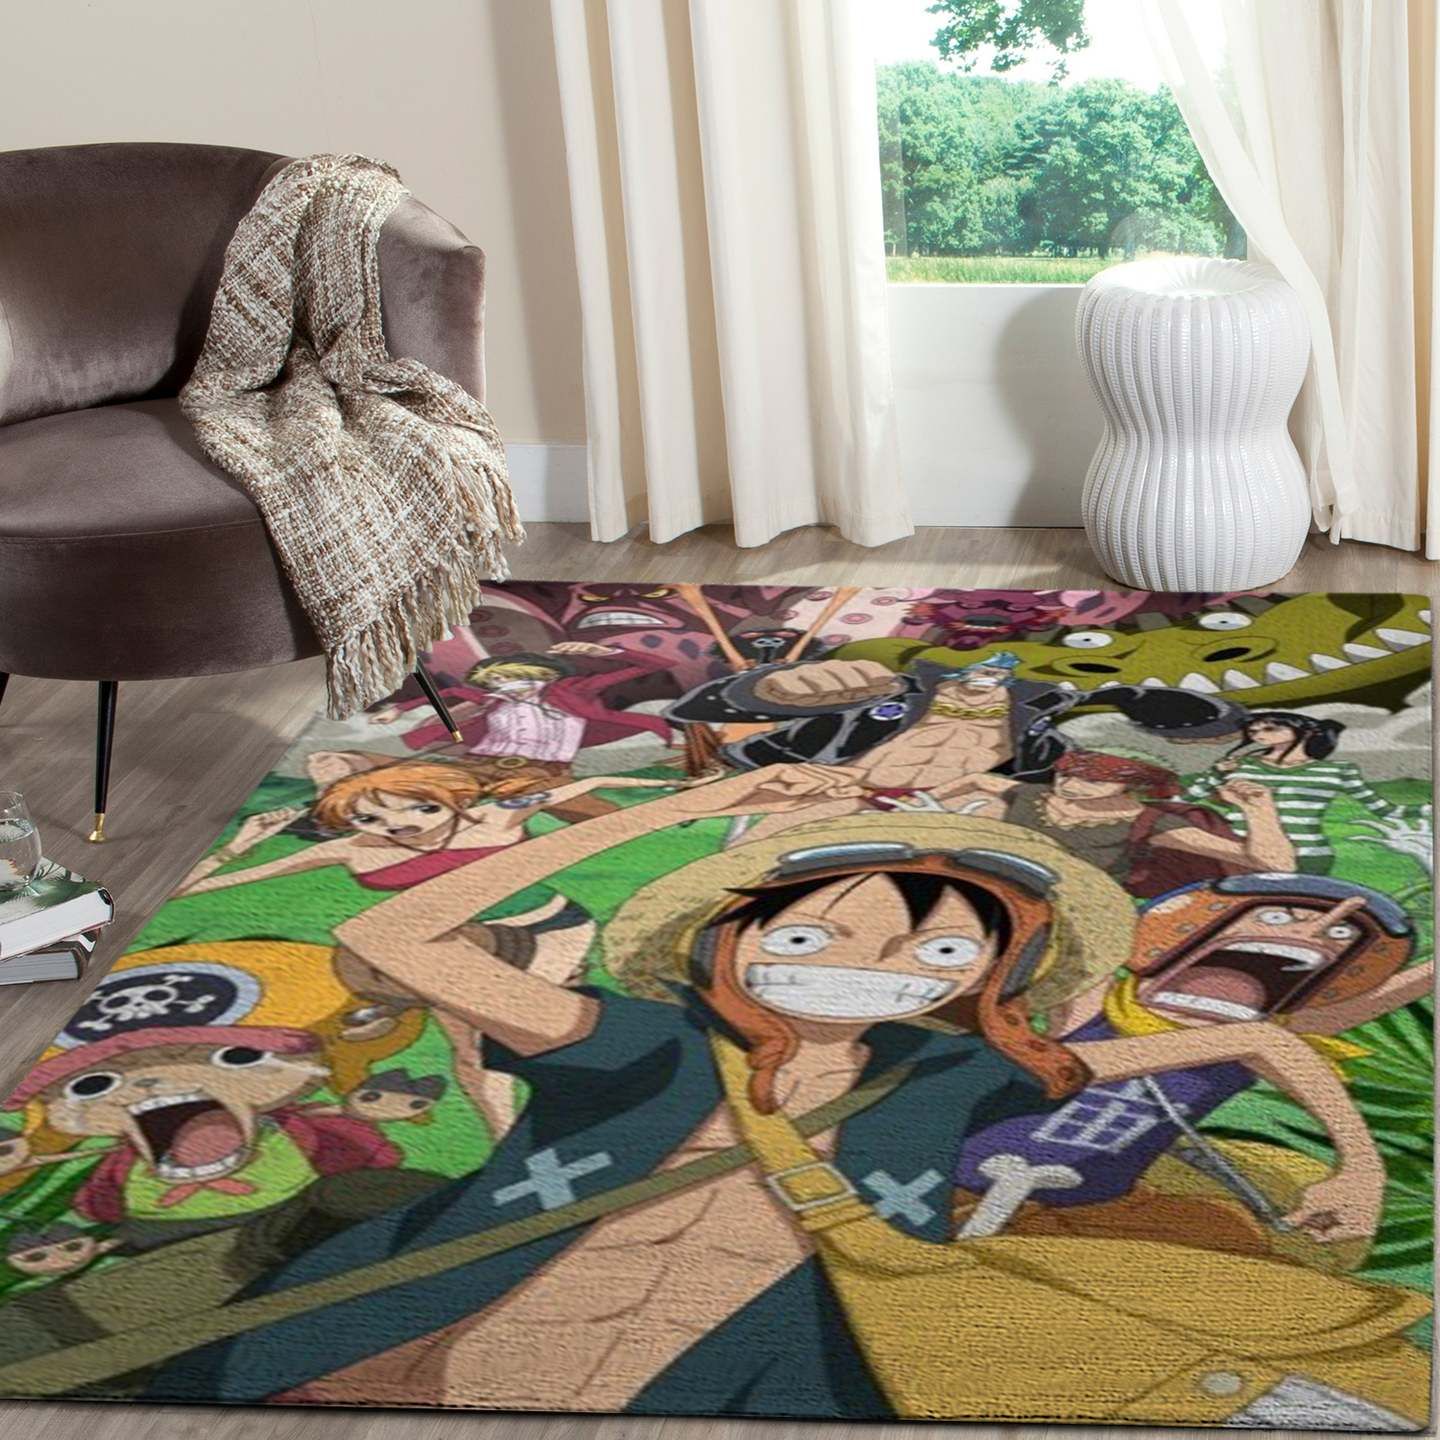 Custom One Piece Area Rug, Personalized Manga Anime Carpet Rug